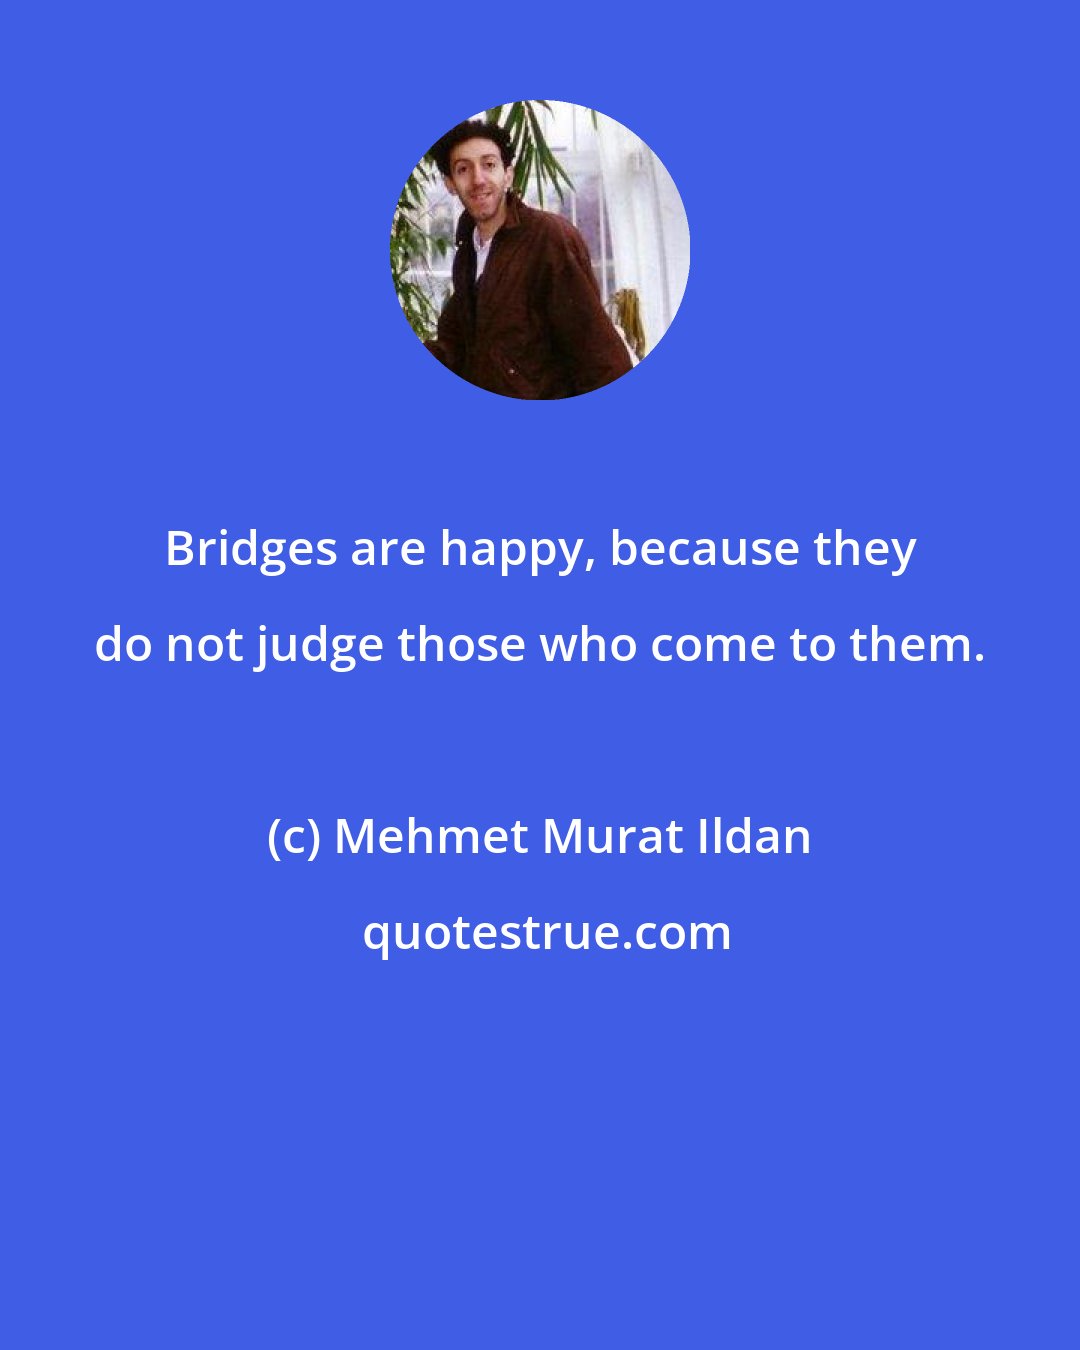 Mehmet Murat Ildan: Bridges are happy, because they do not judge those who come to them.